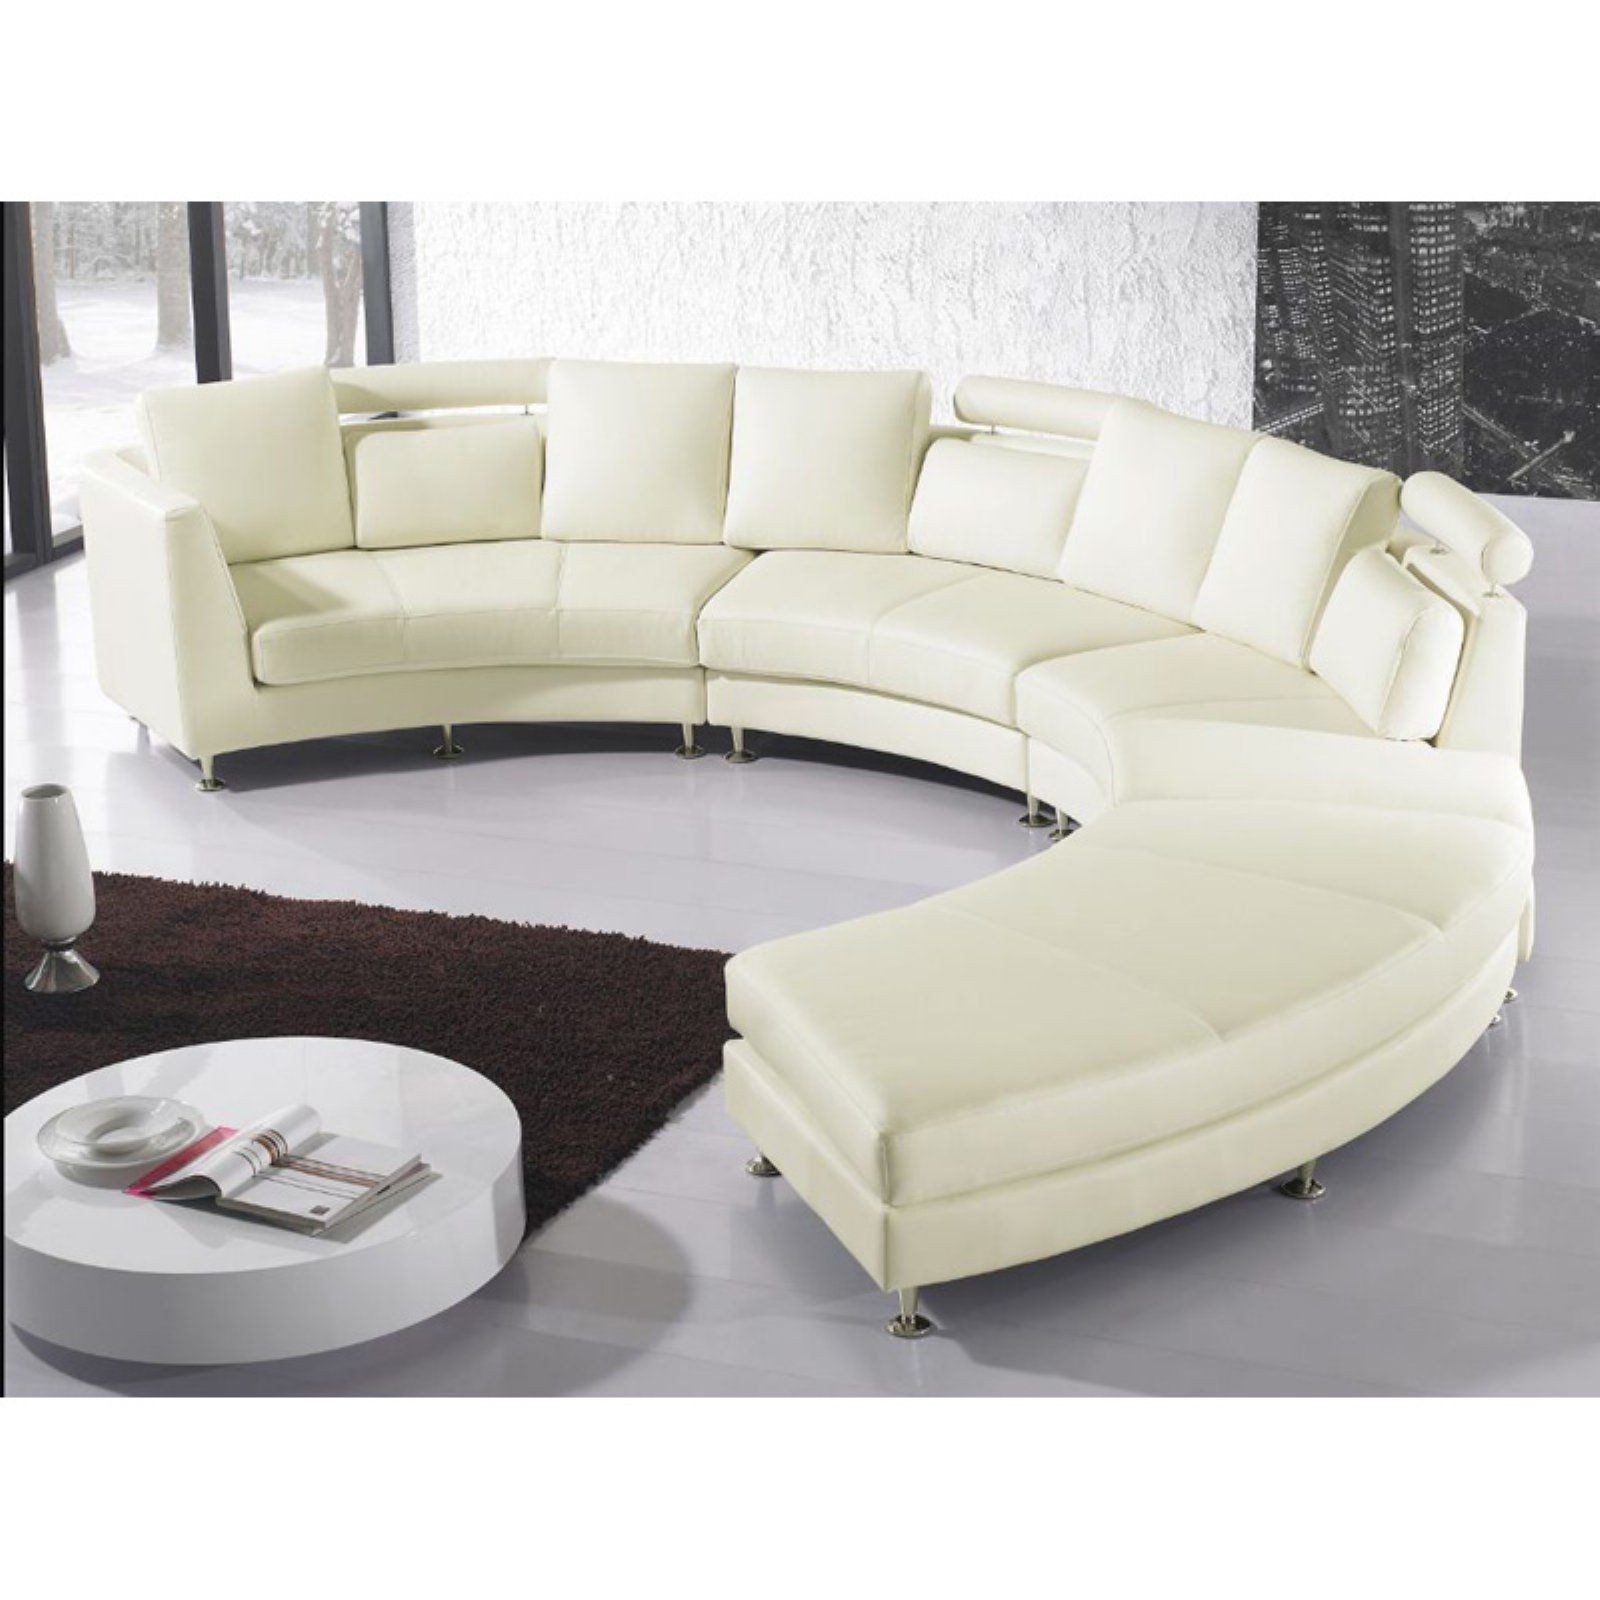 Velago rossini modern round leather sectional sofa white